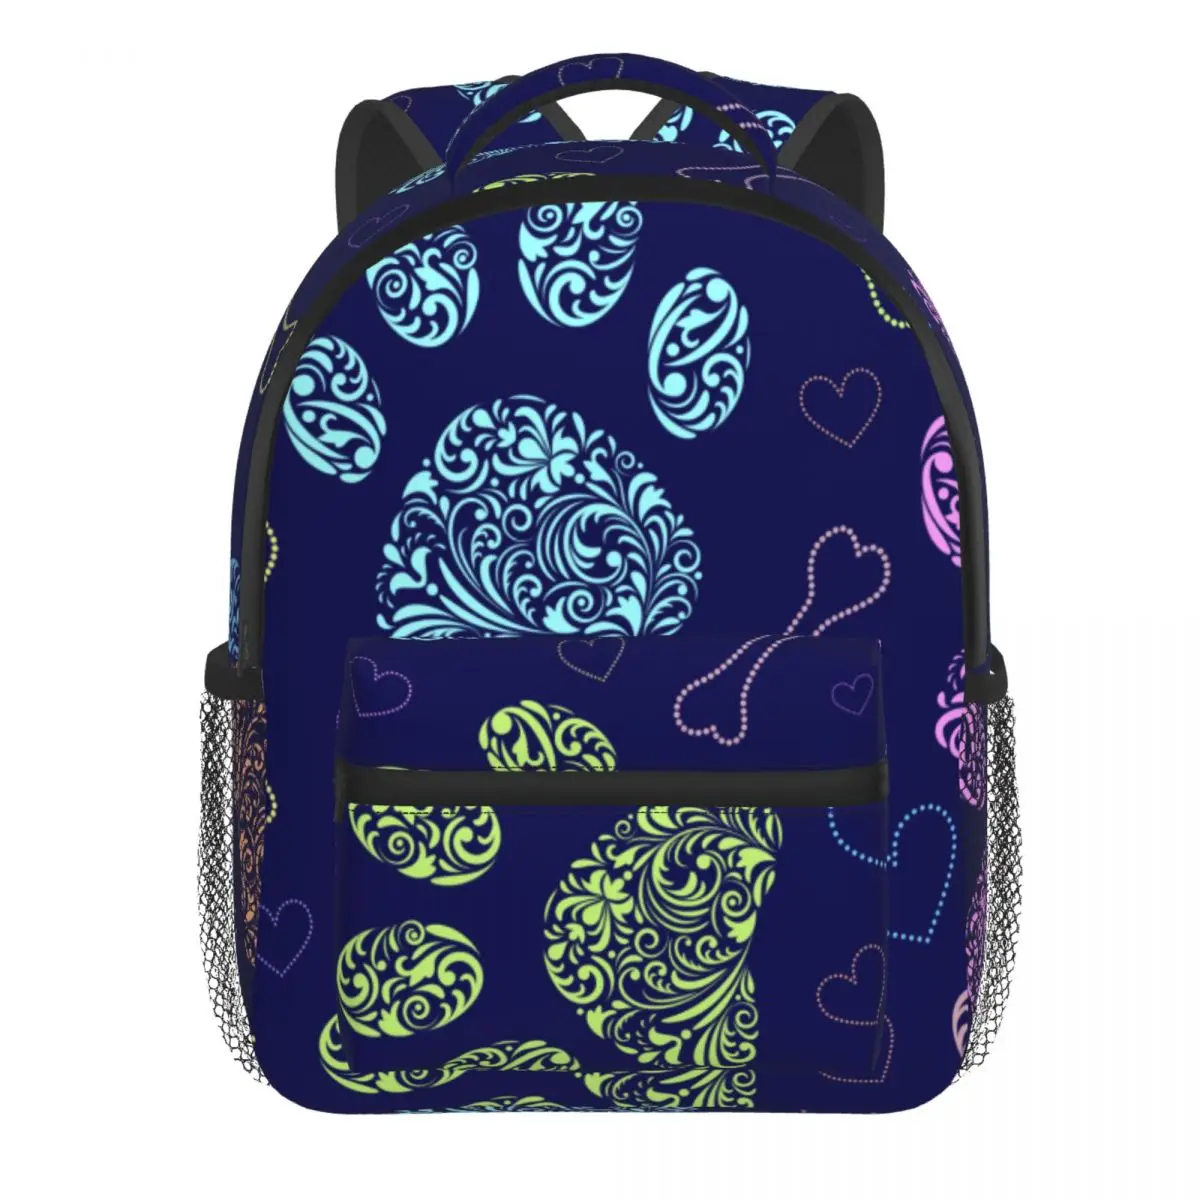 Floral Animal Paws Dark Blue Print Kids Backpack Toddler School Bag Kindergarten Mochila for Boys Girls 2-5 Years